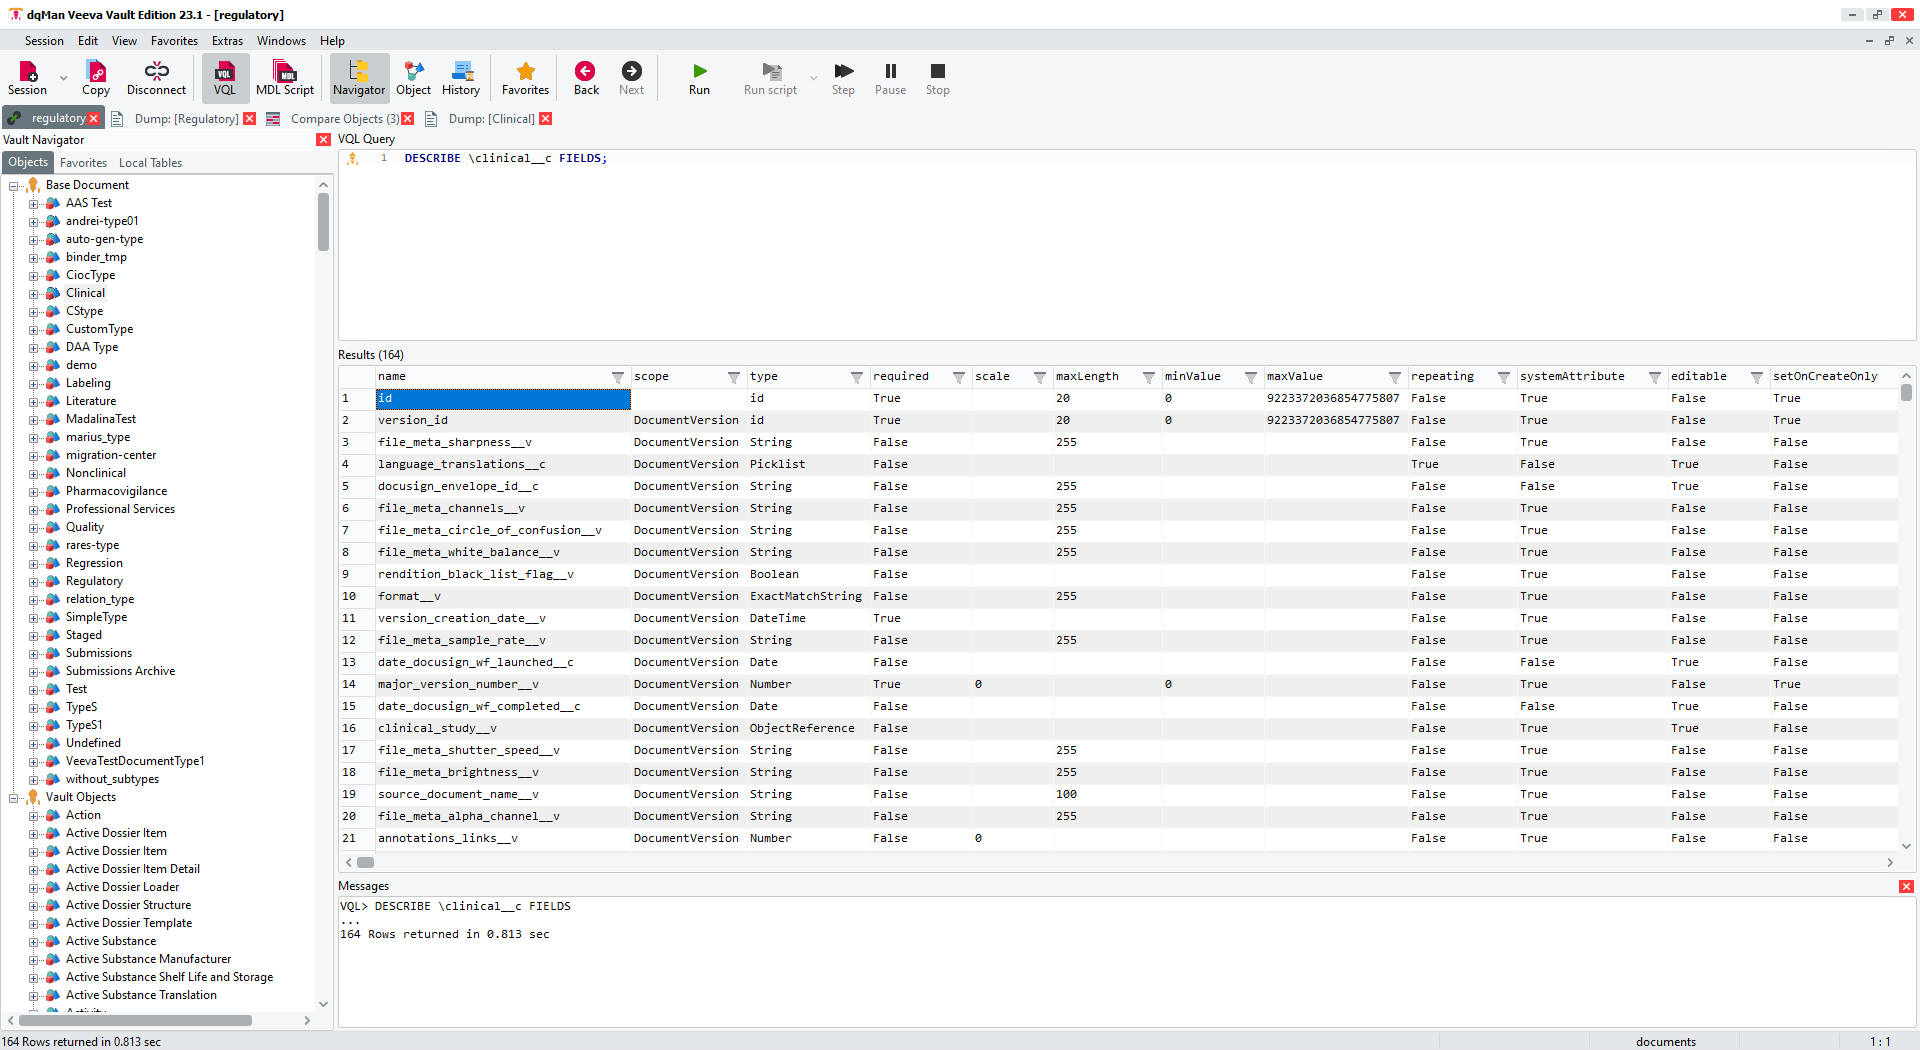 Screenshot | dqMan version to administer Veeva applications | 02